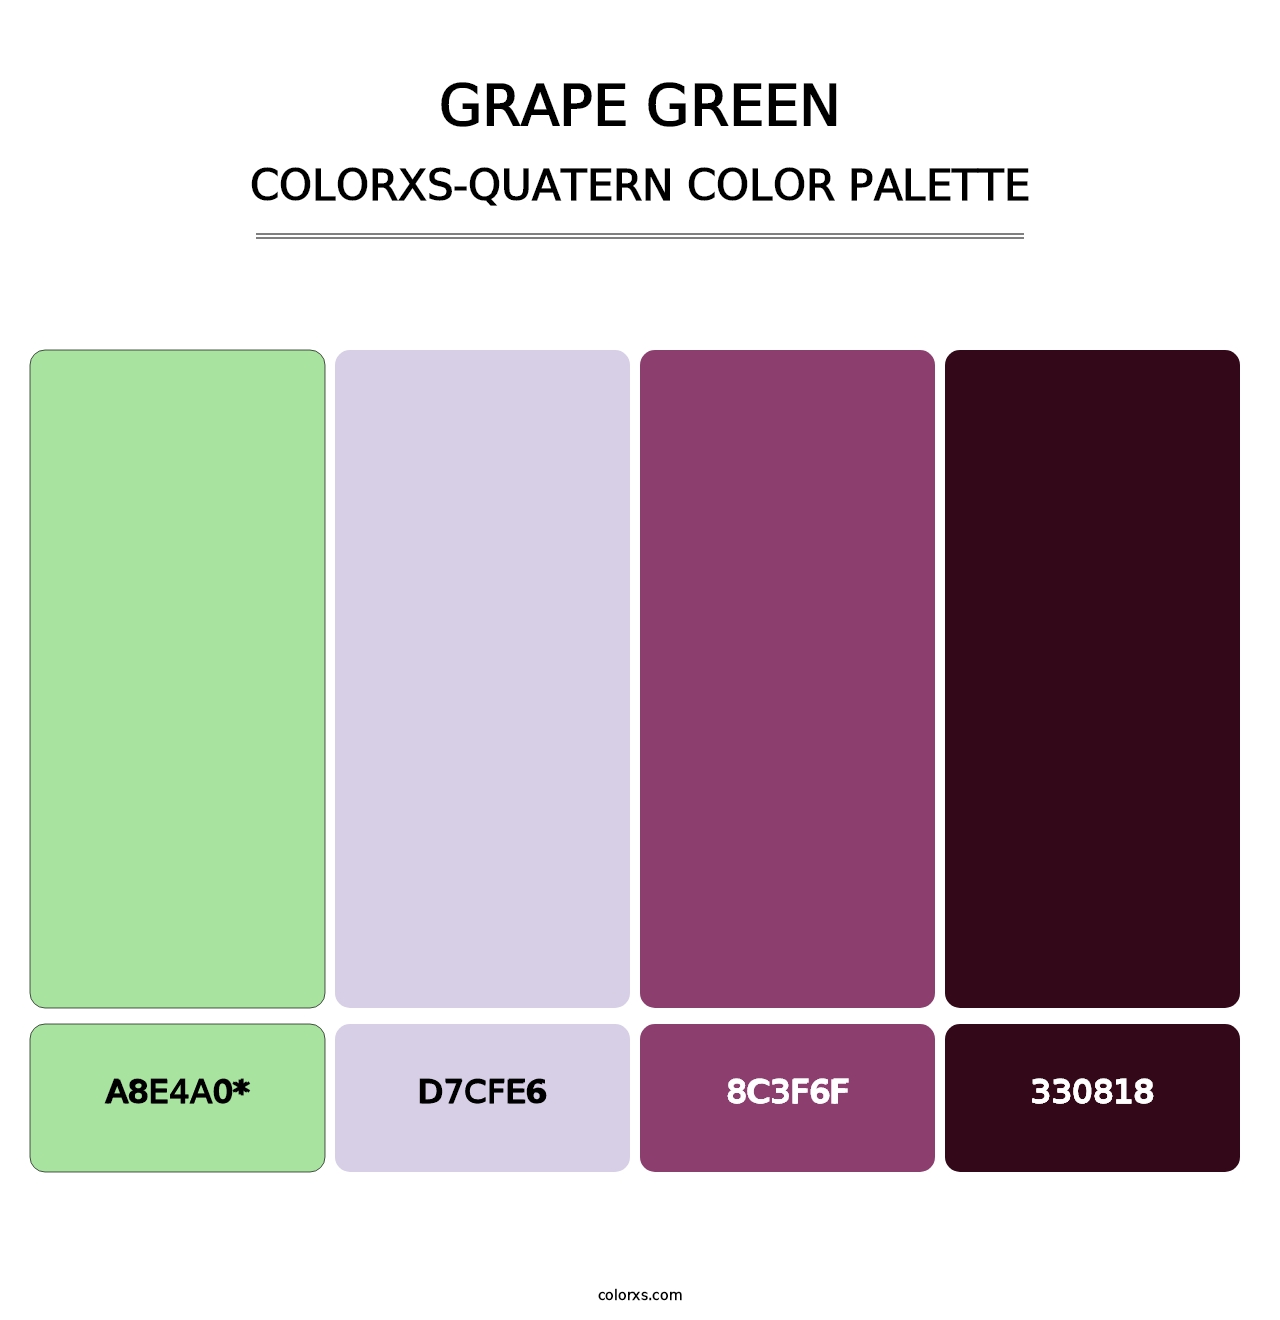 Grape Green - Colorxs Quatern Palette